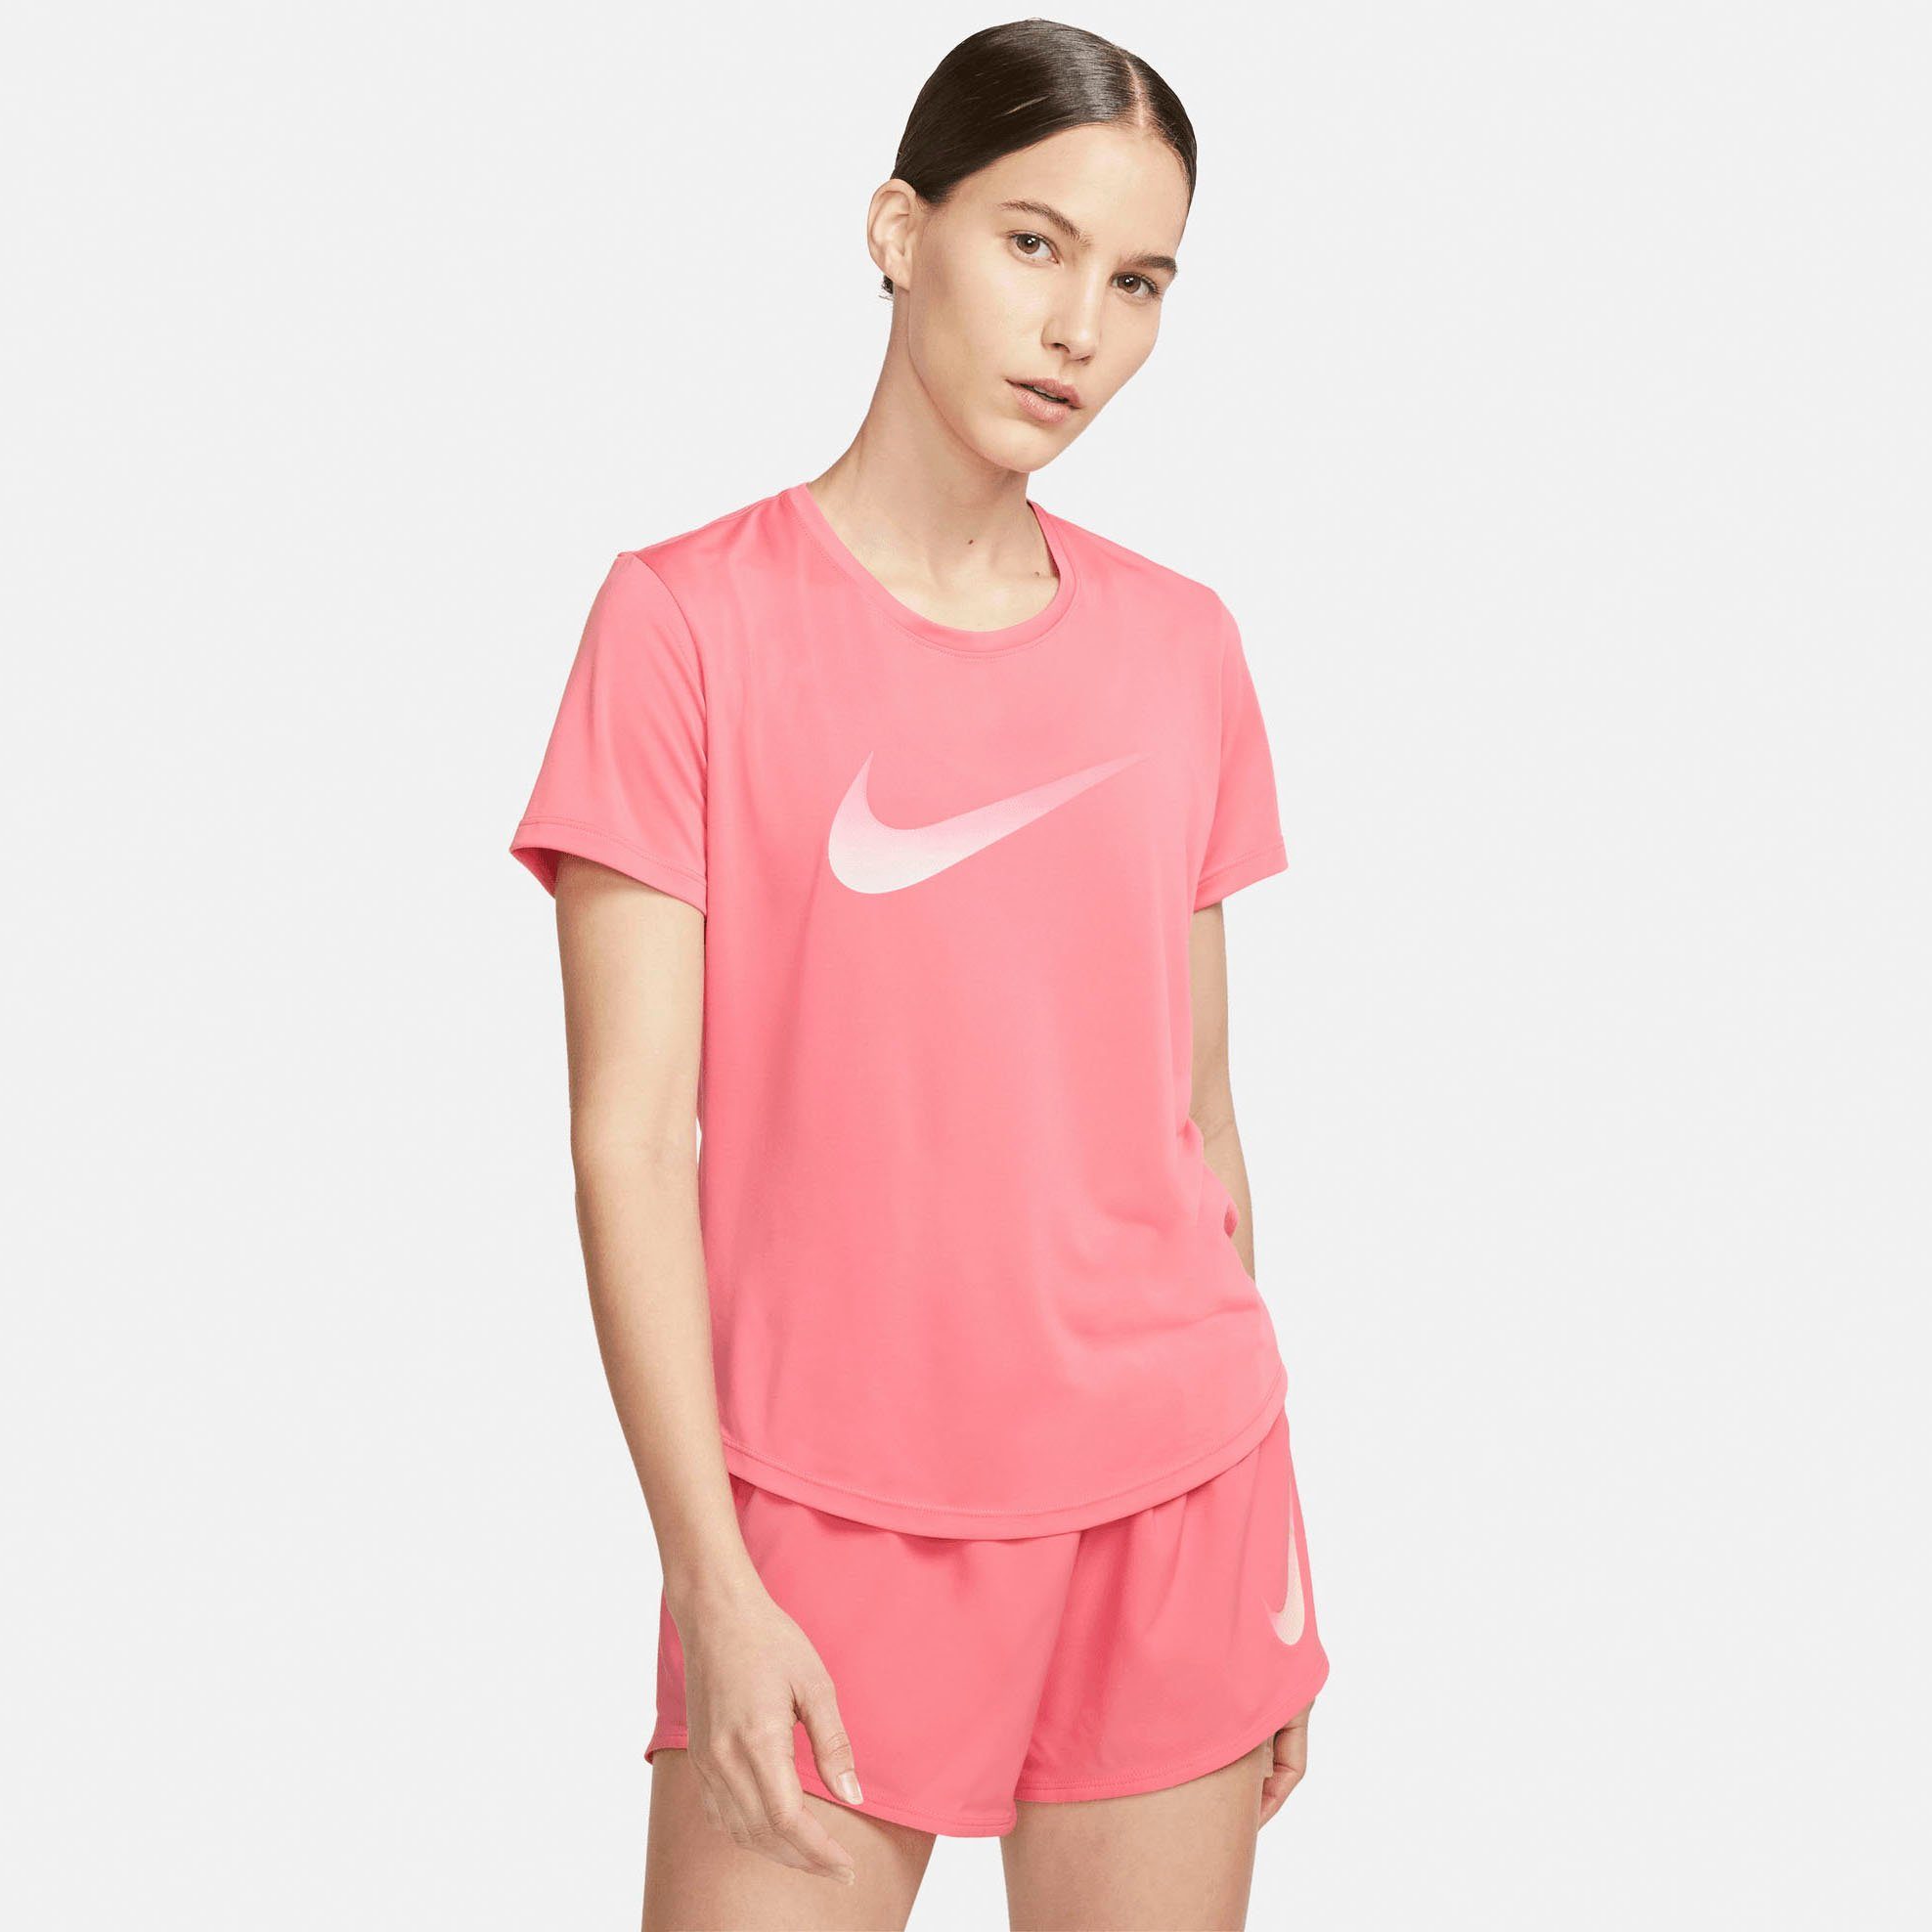 Nike Swoosh One Short-Sleeved Dri-FIT orange Laufshirt Top Women's